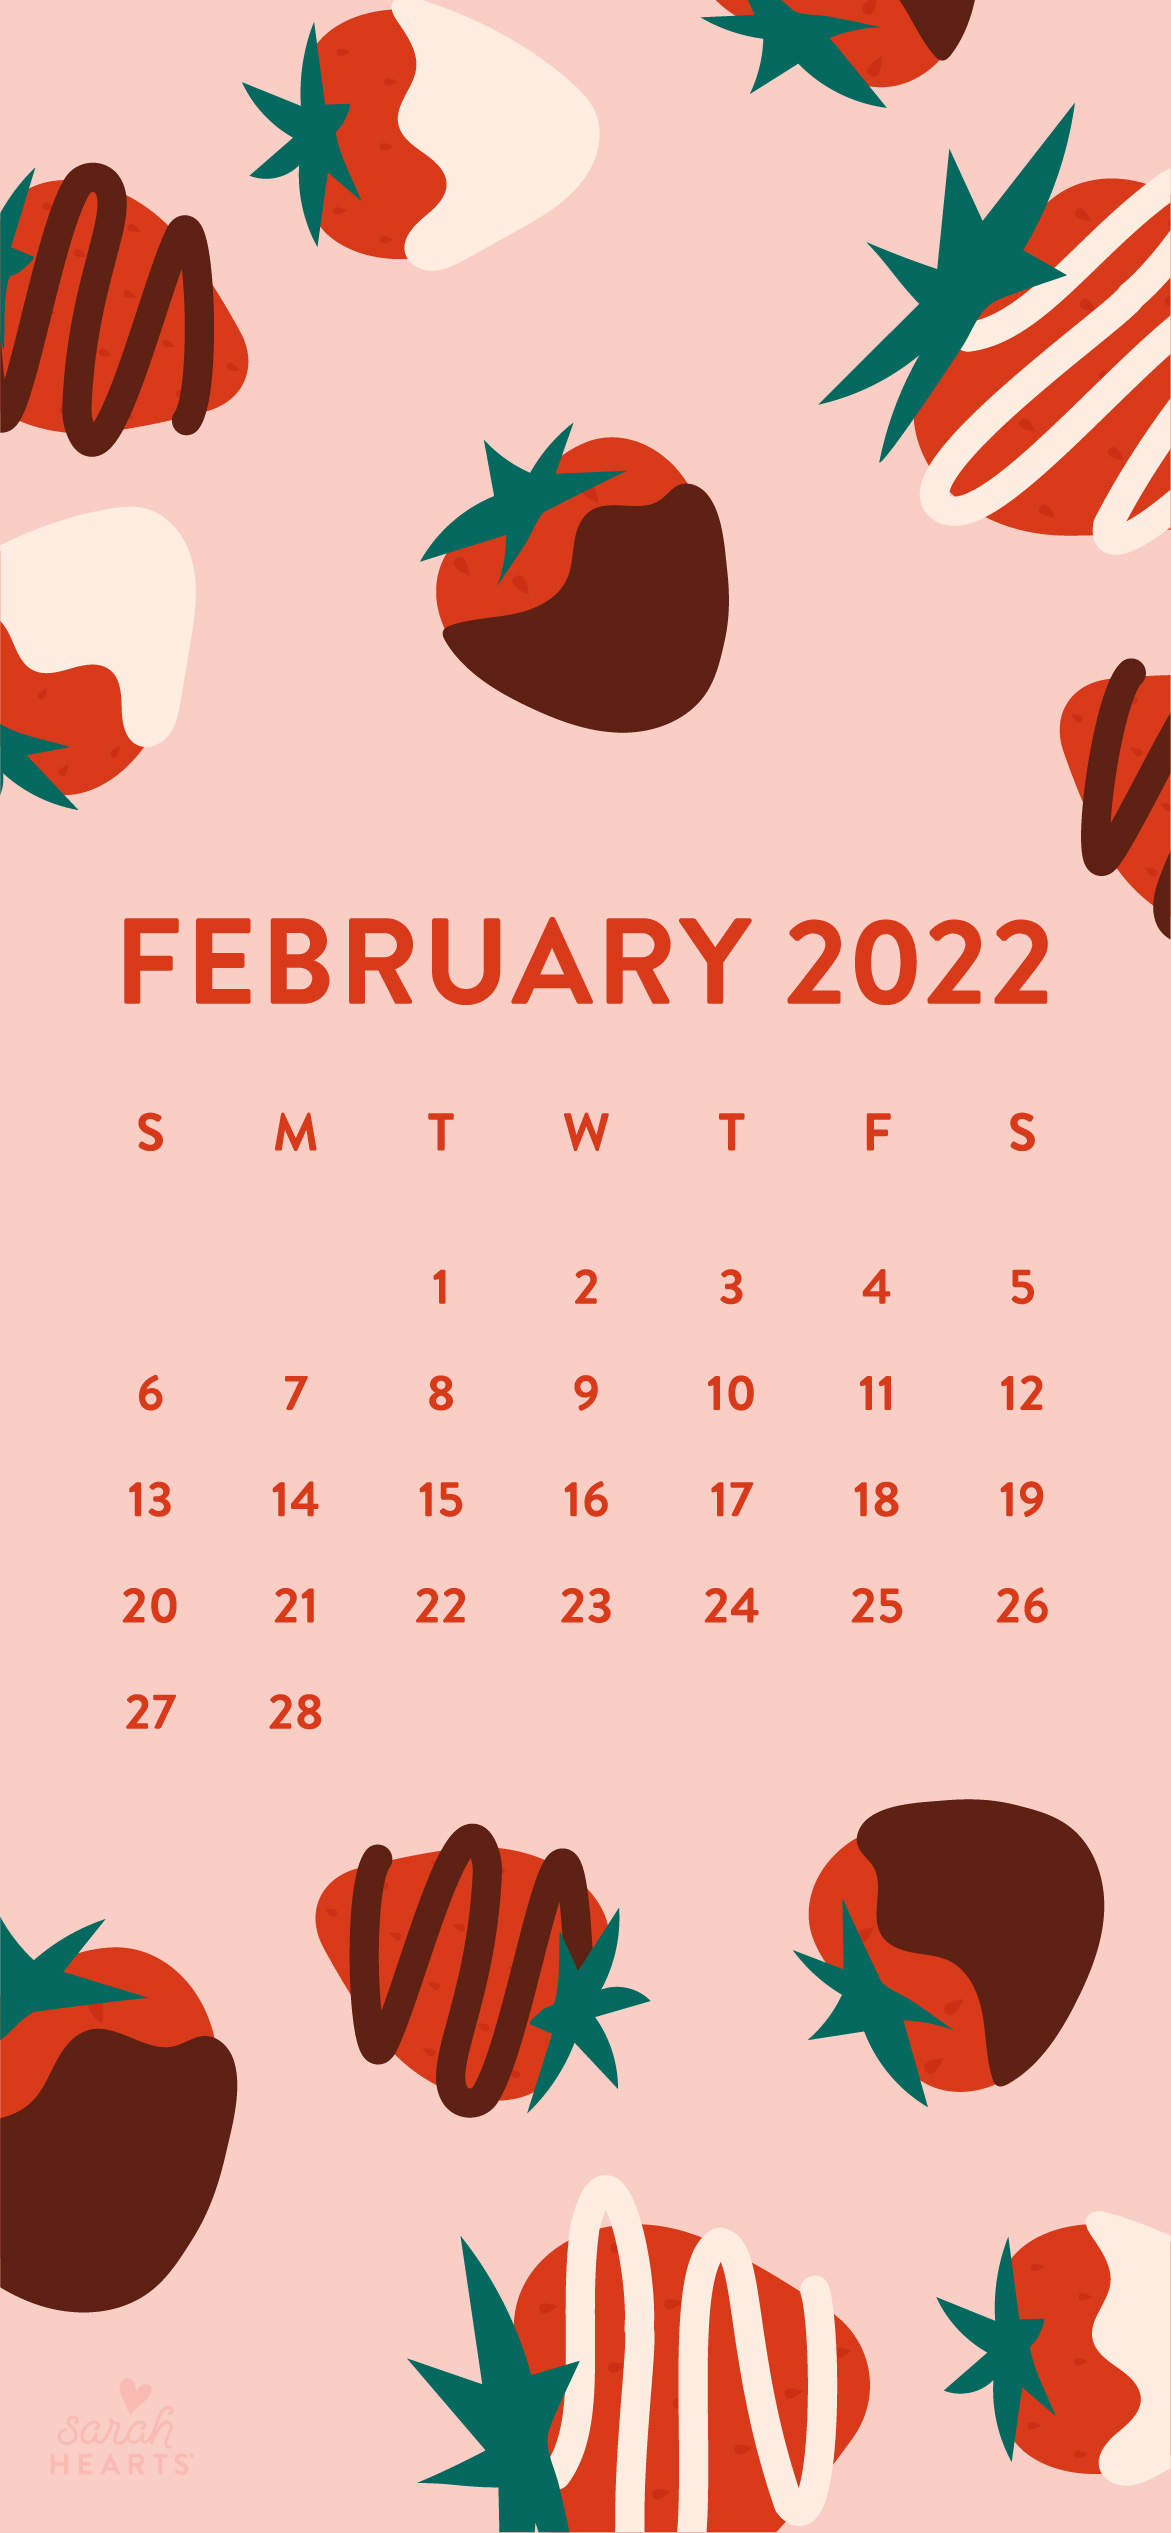 February 2022 Calendar Wallpaper February 2022 Chocolate Dipped Strawberry Calendar Wallpaper - Sarah Hearts